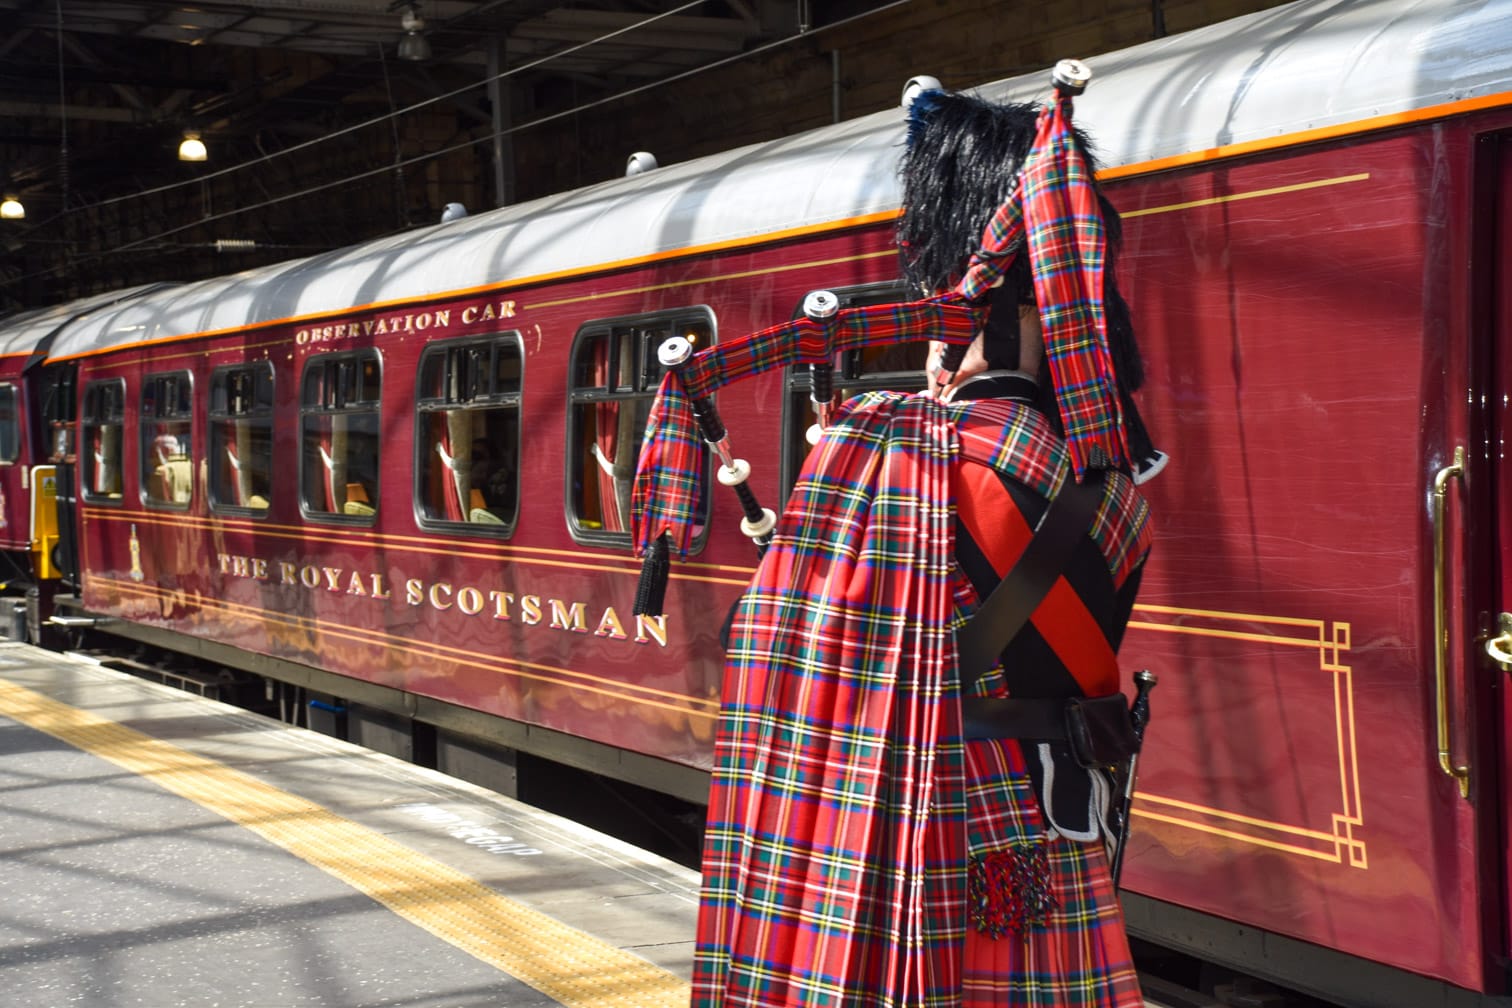 Belmond Royal Scotsman Luxury Train Club